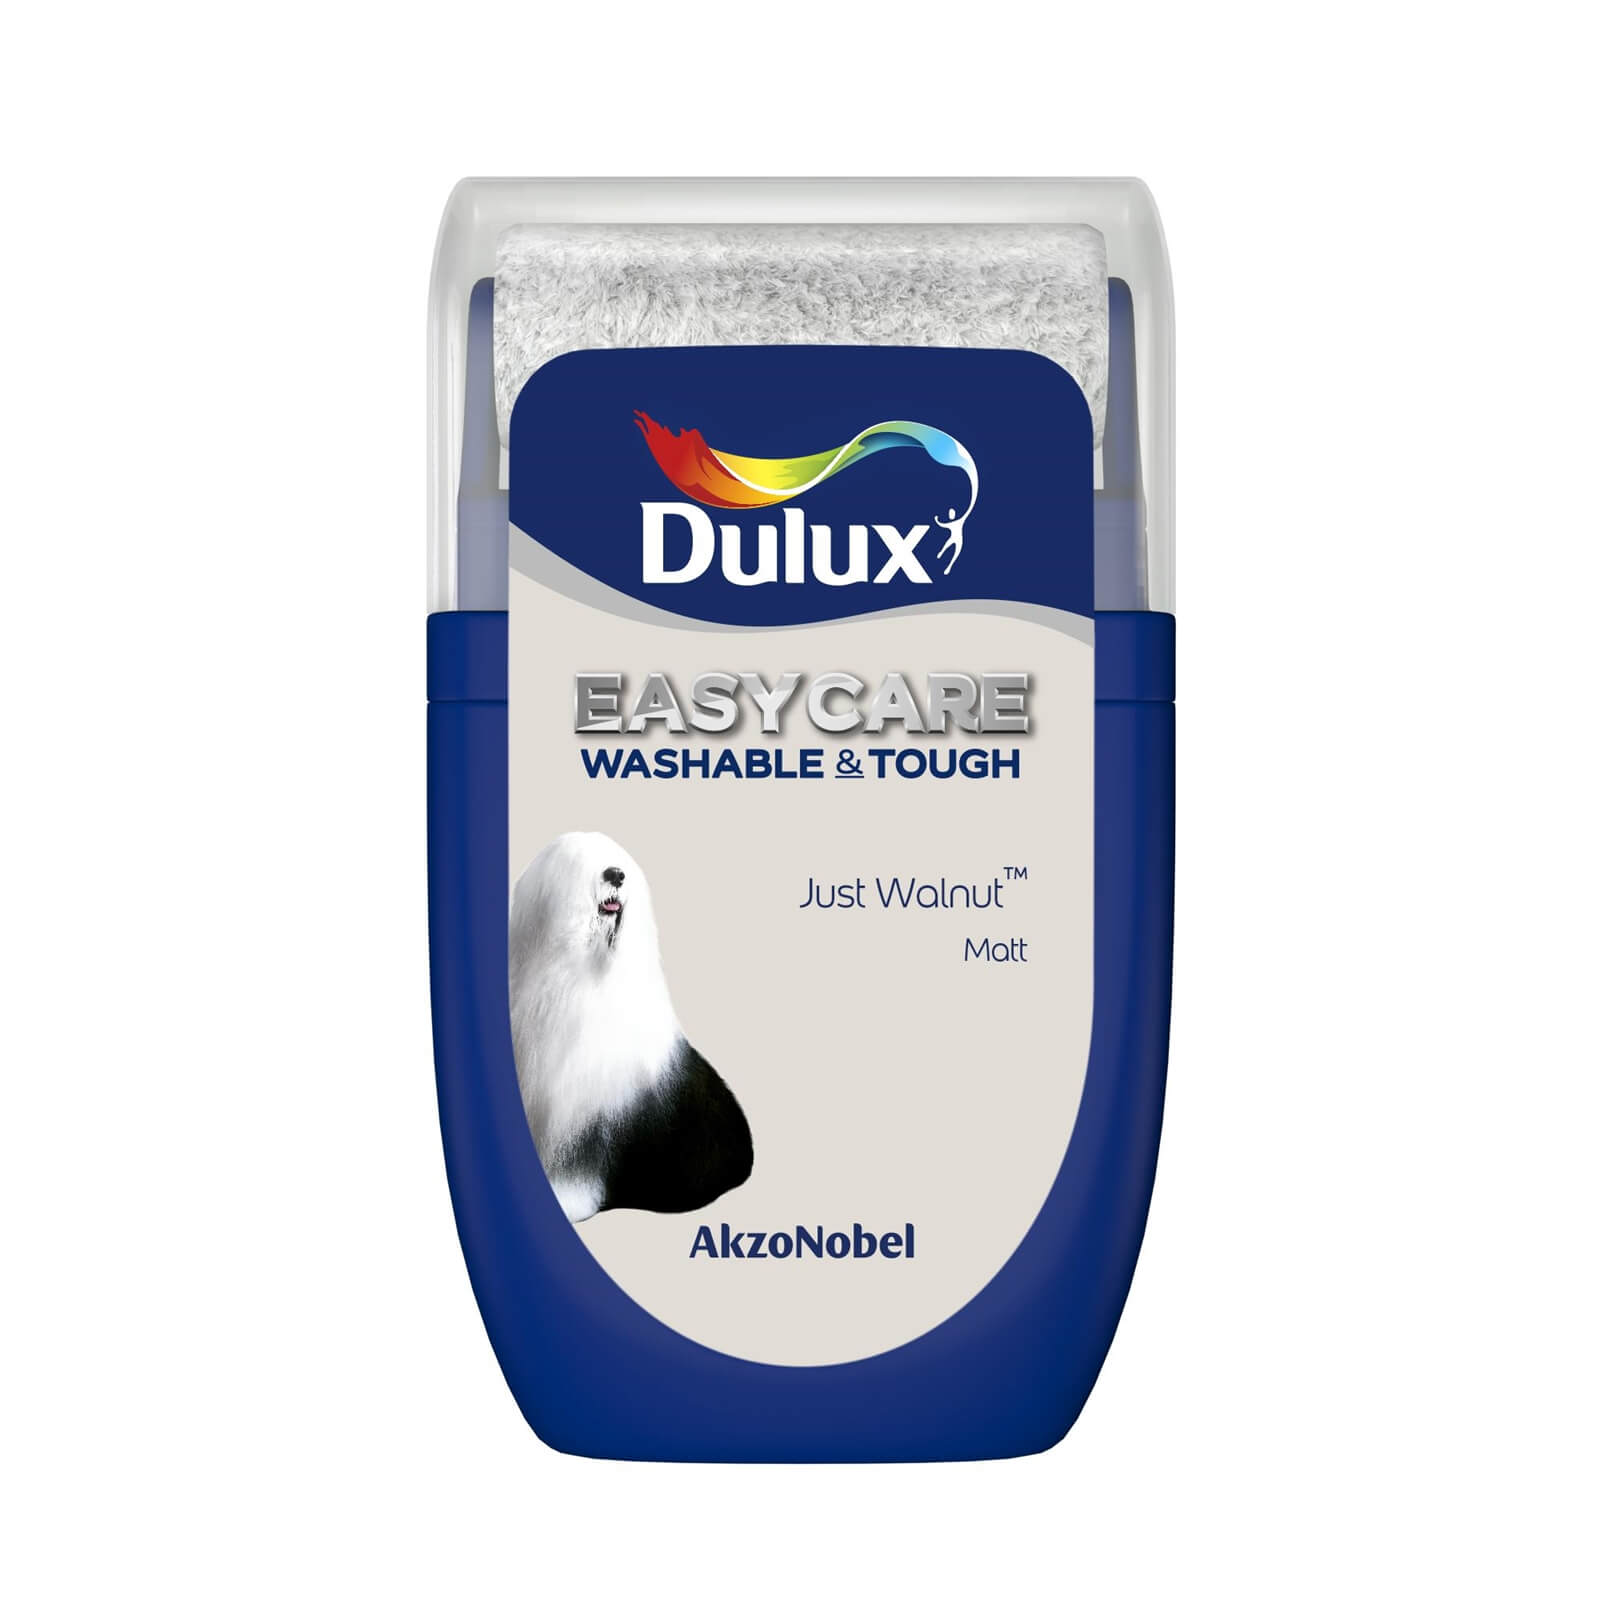 Dulux Easycare Washable & Tough Matt Paint Just Walnut - Tester 30ml